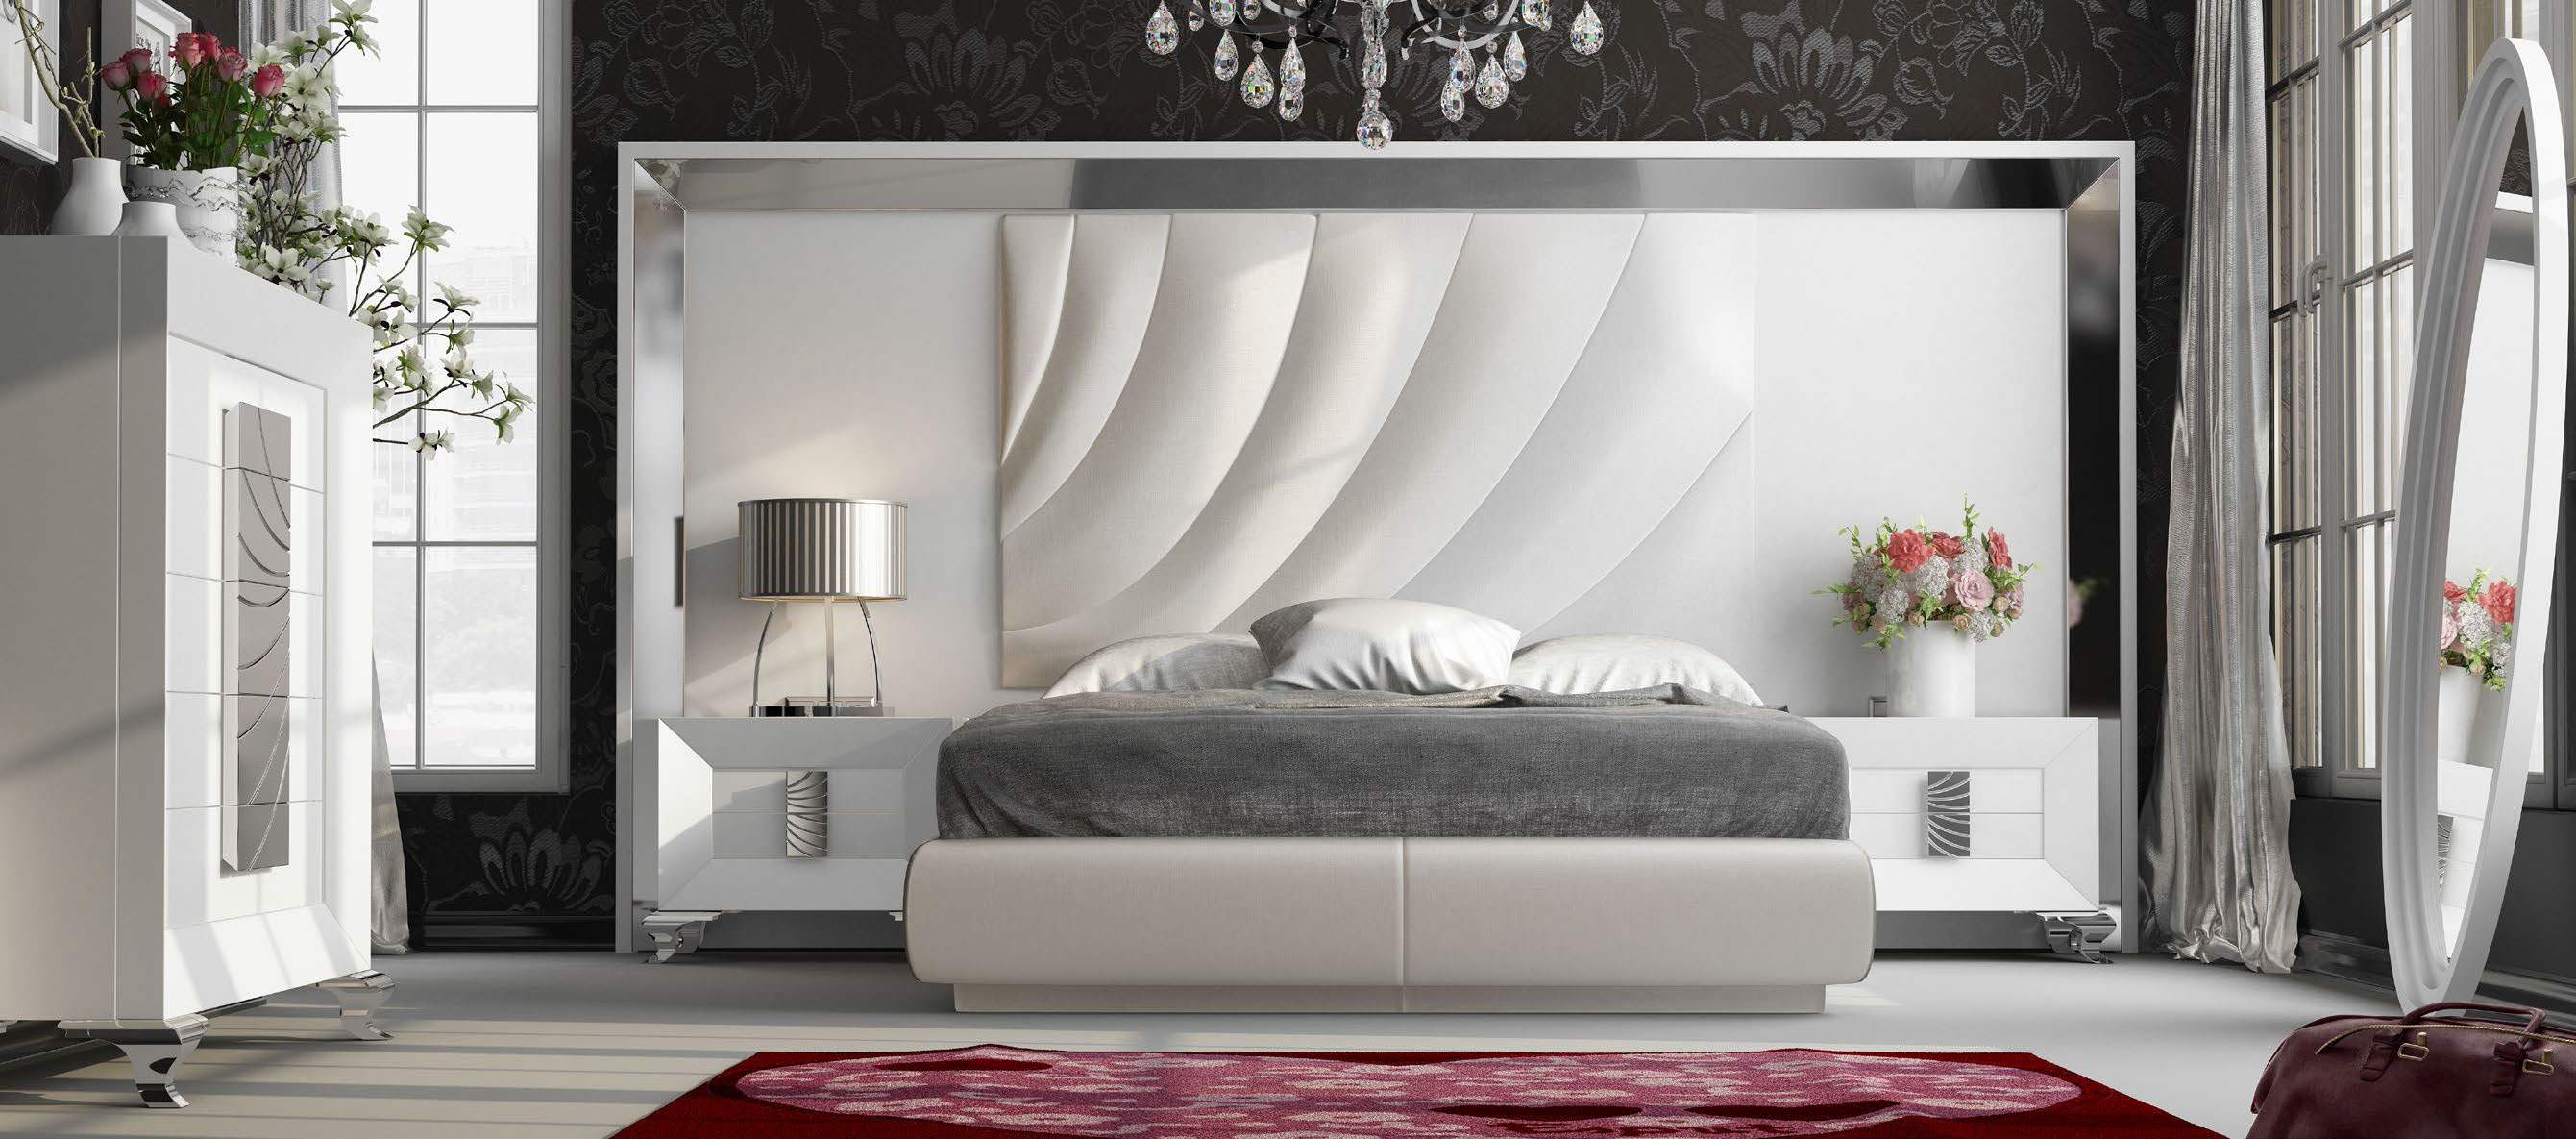 Brands Franco Furniture Bedrooms vol3, Spain DOR 129